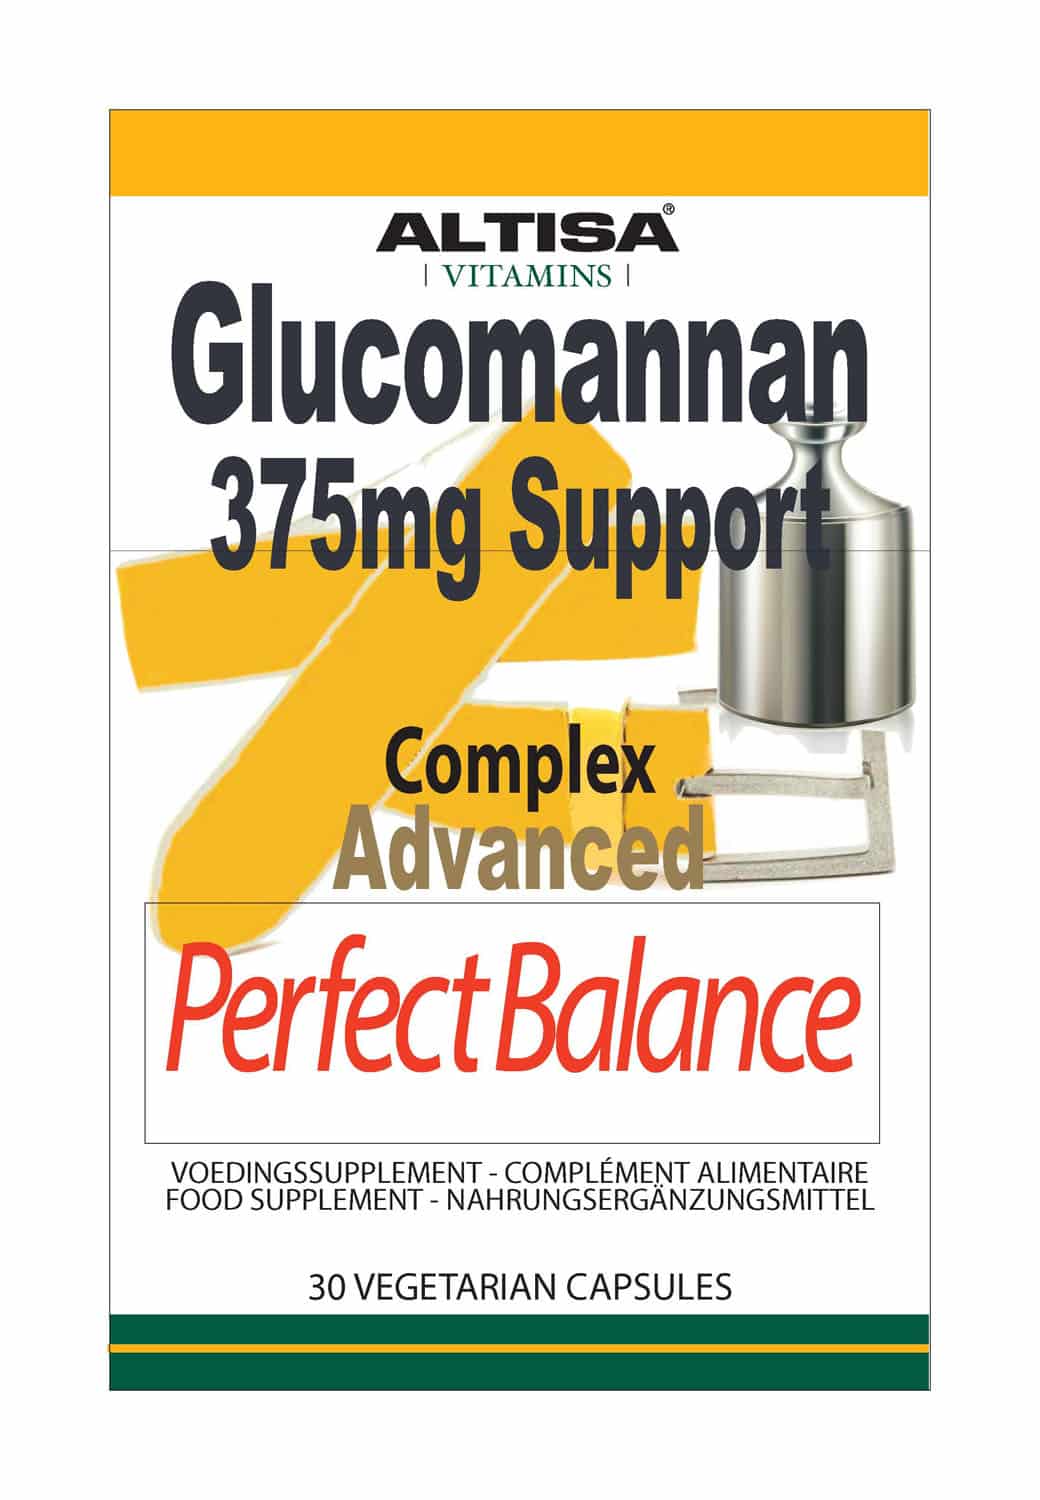 Altisa Glucomanan 375 mg Complex